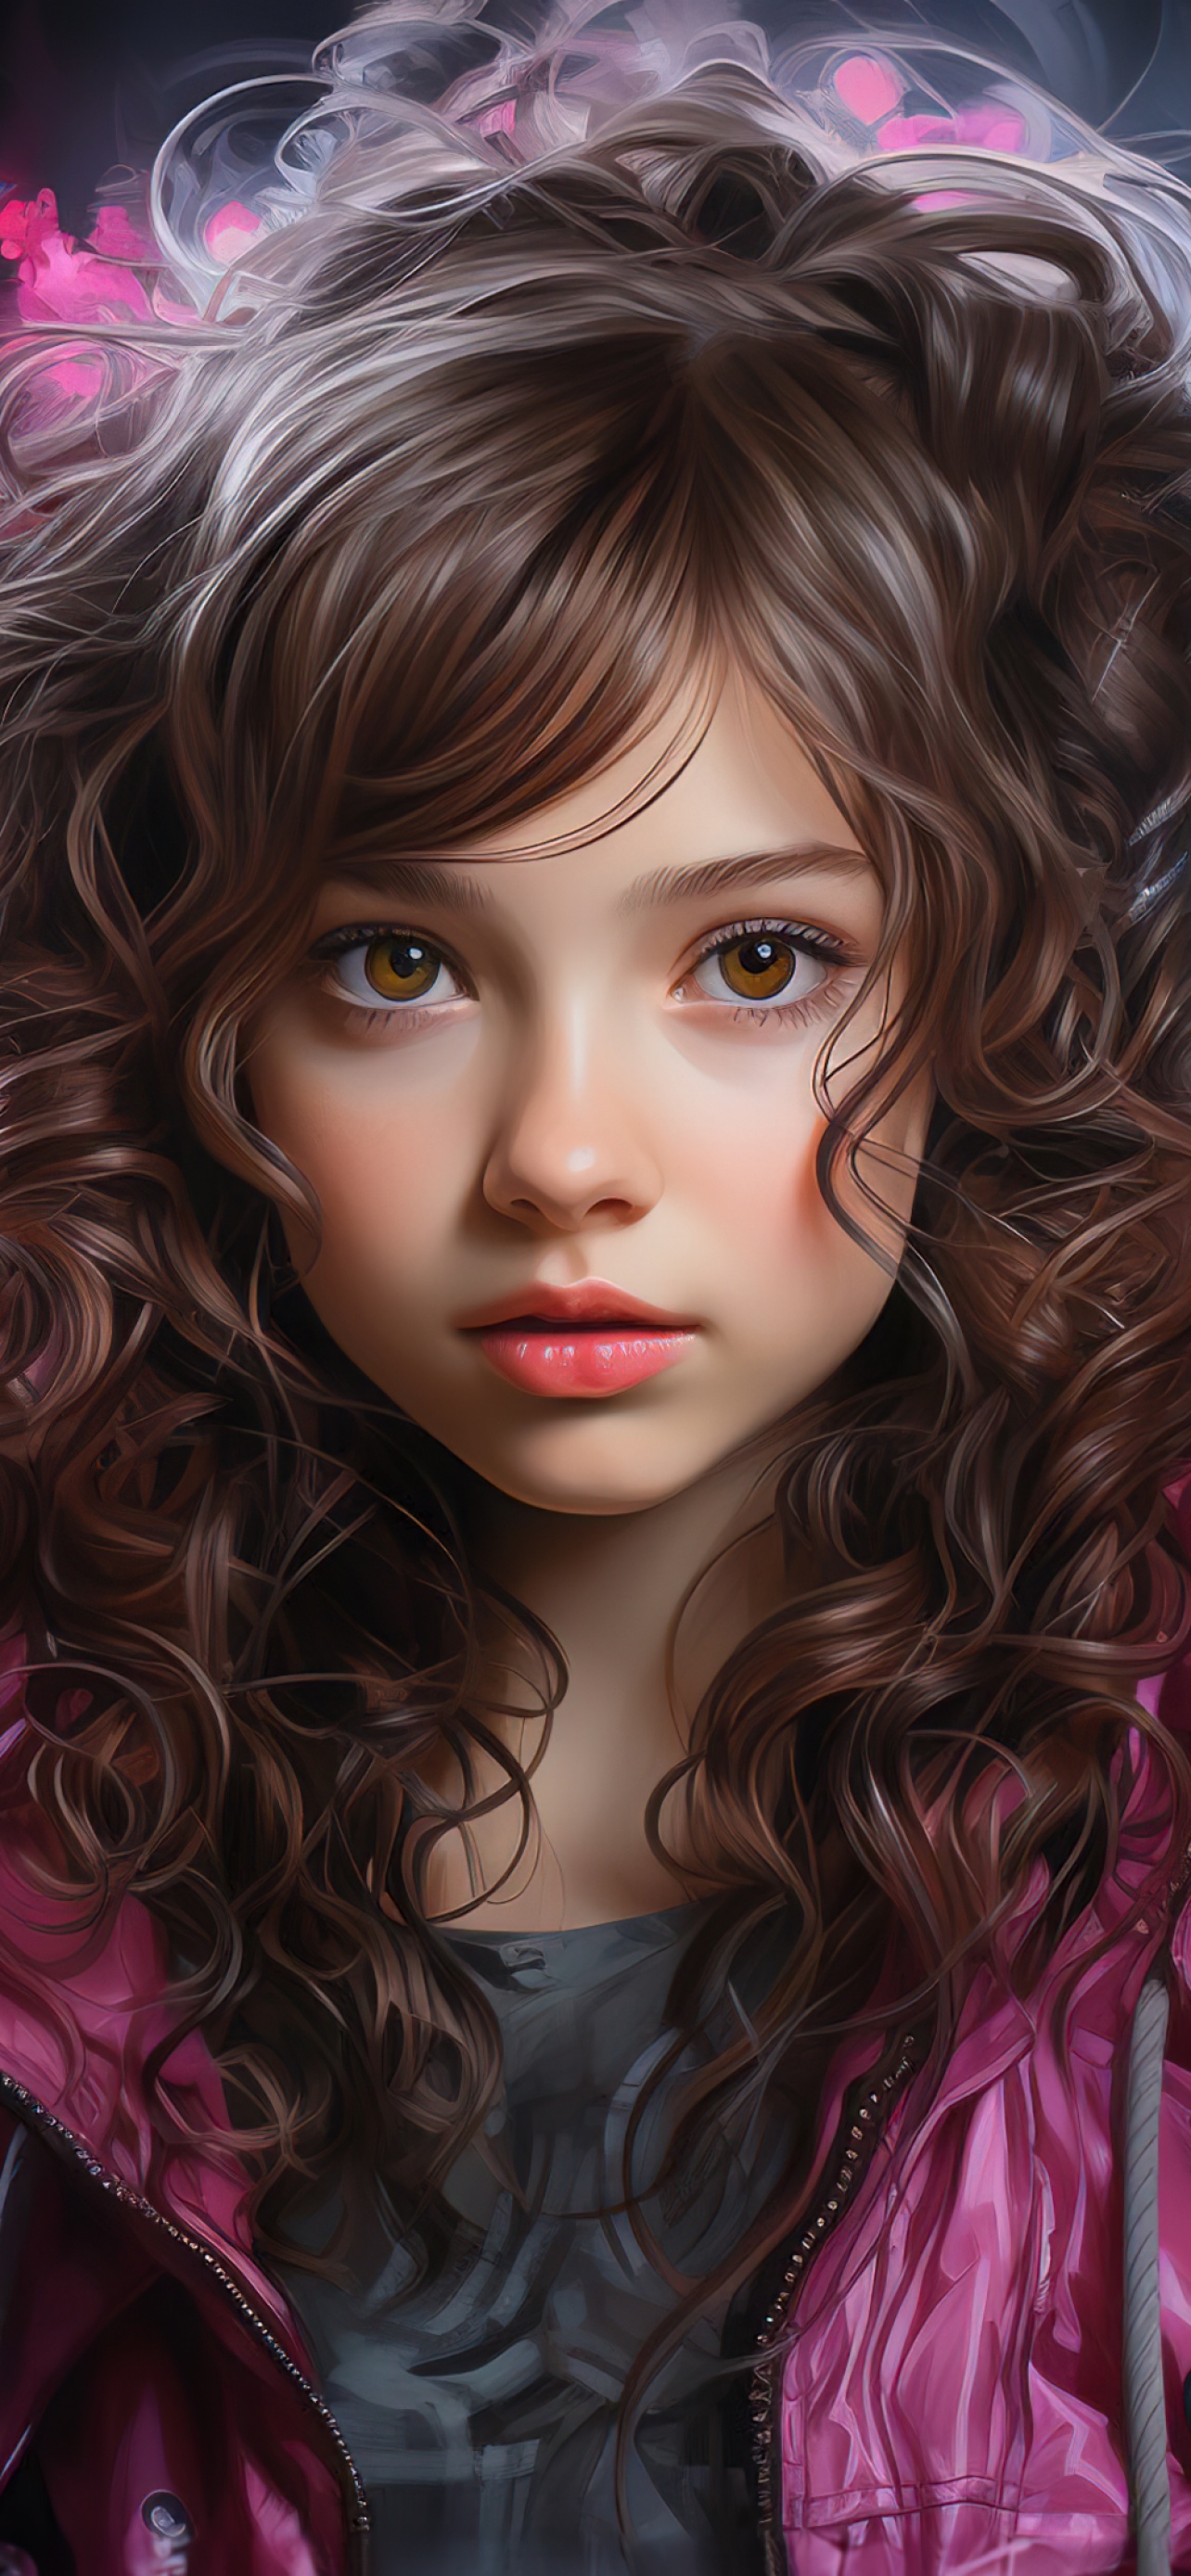 Download wallpaper 1125x2436 black angel, cute, anime girl, art, iphone x,  1125x2436 hd background, 15859